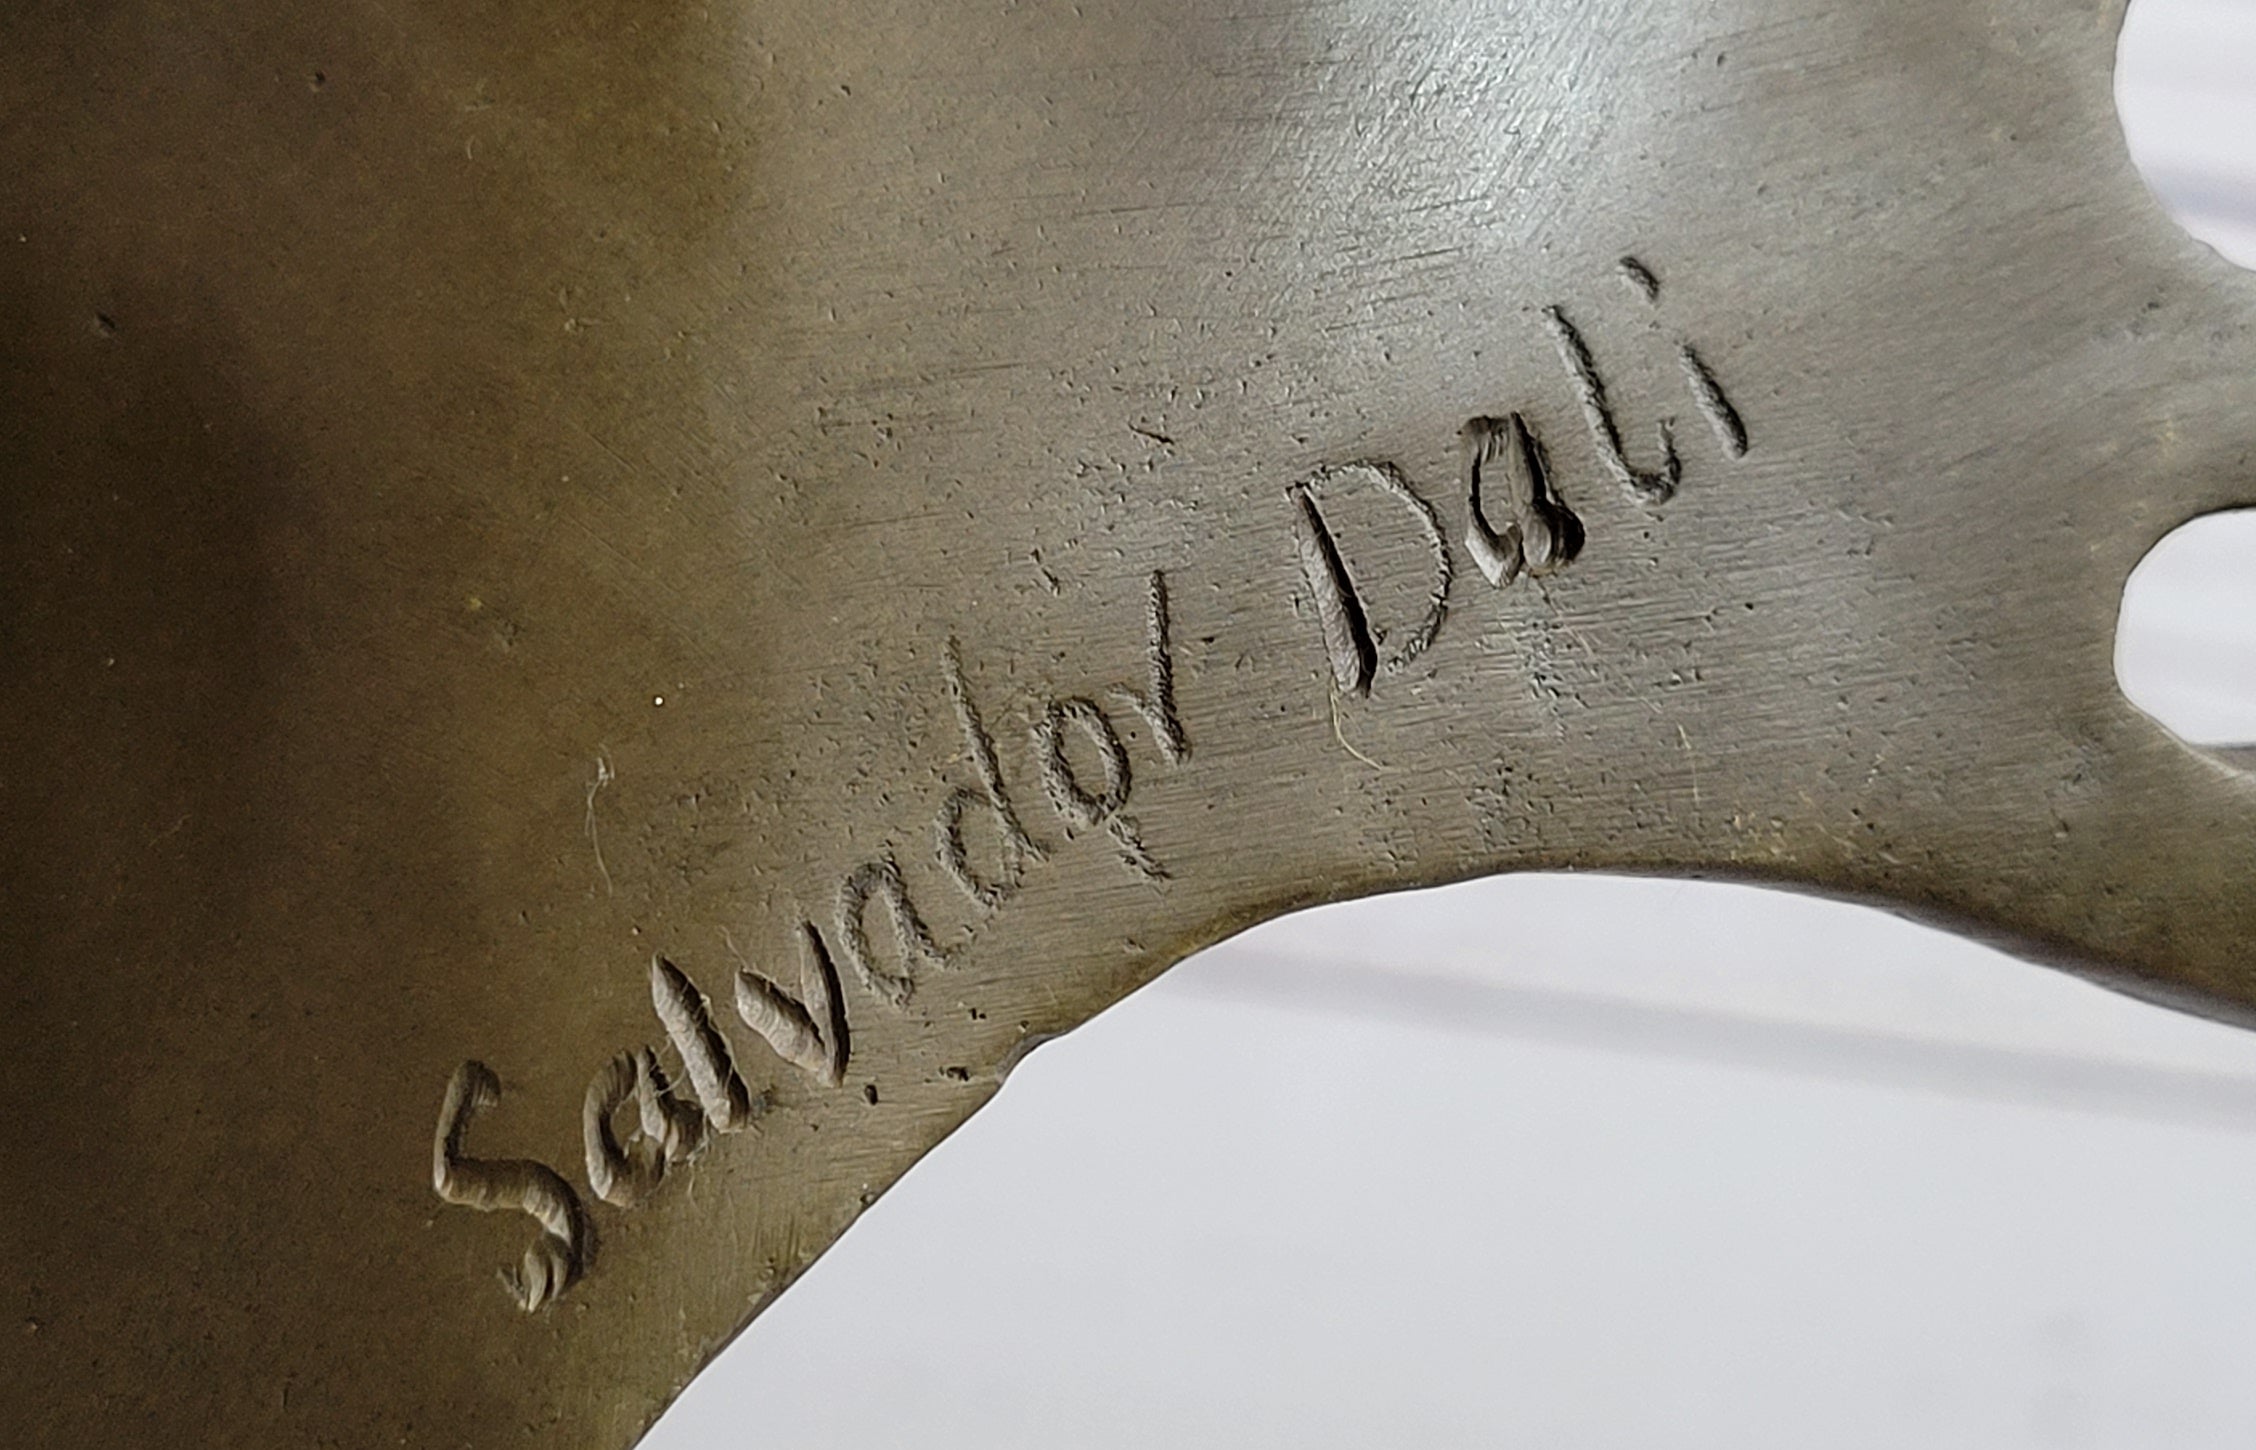 Salvador Dali Double Hands Handcrafted Bronze Sculpture Marble Base Figurine Art